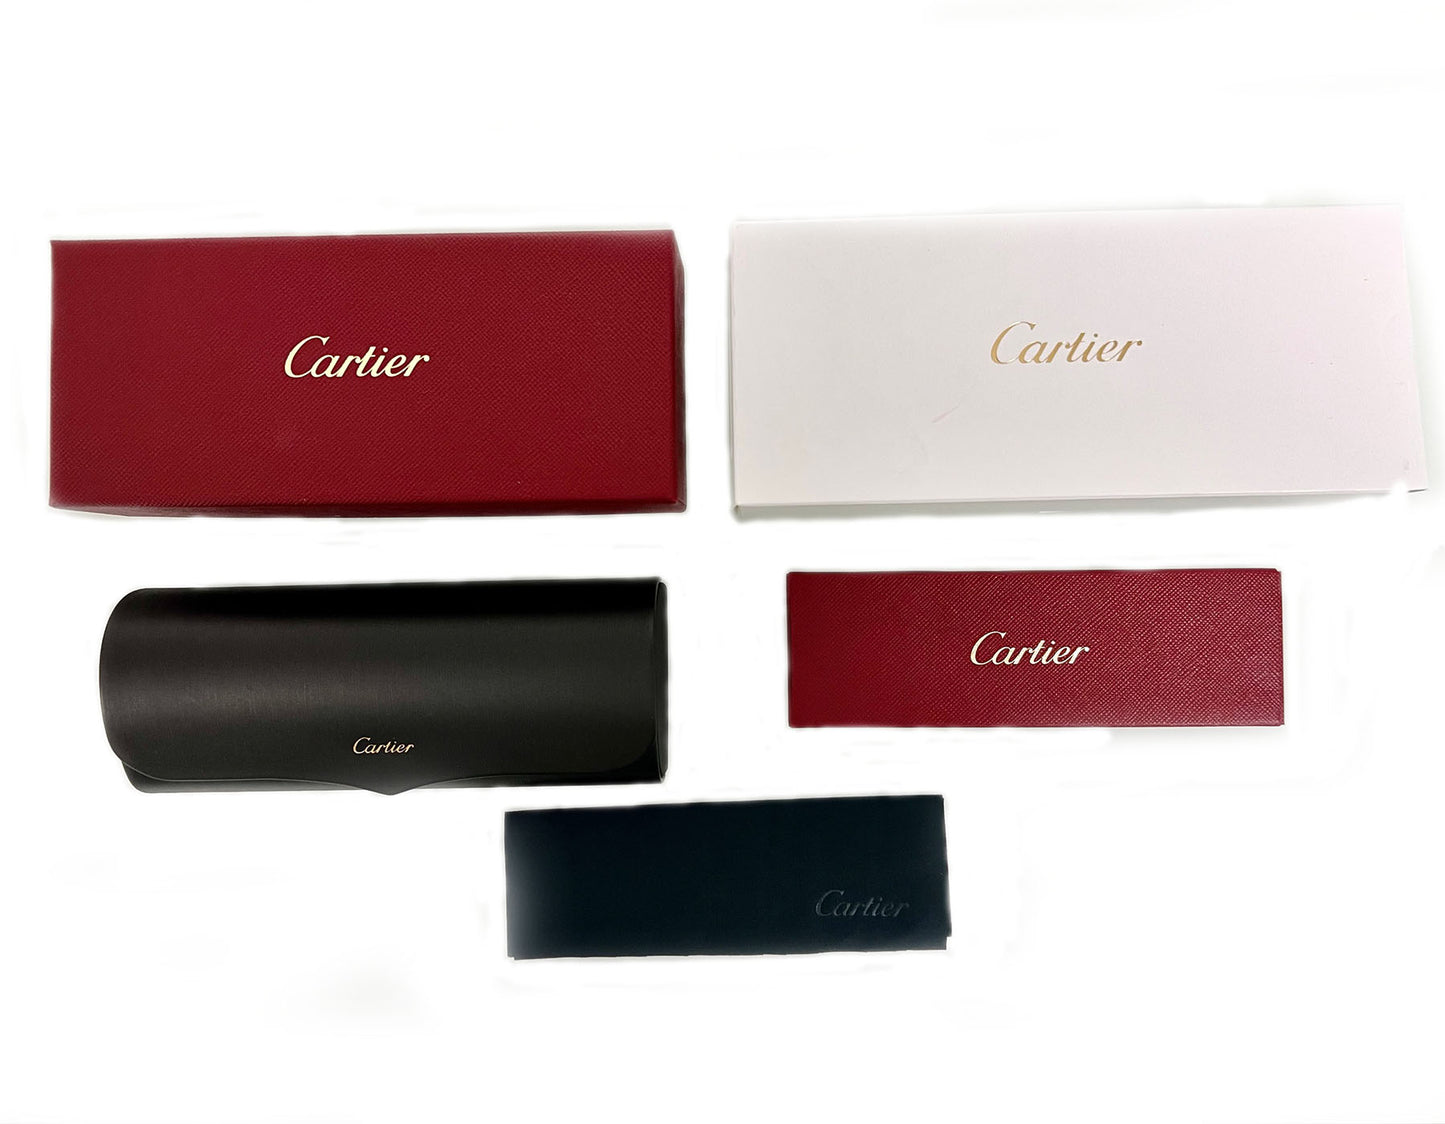 Cartier CT0334S-002-61 61mm New Sunglasses